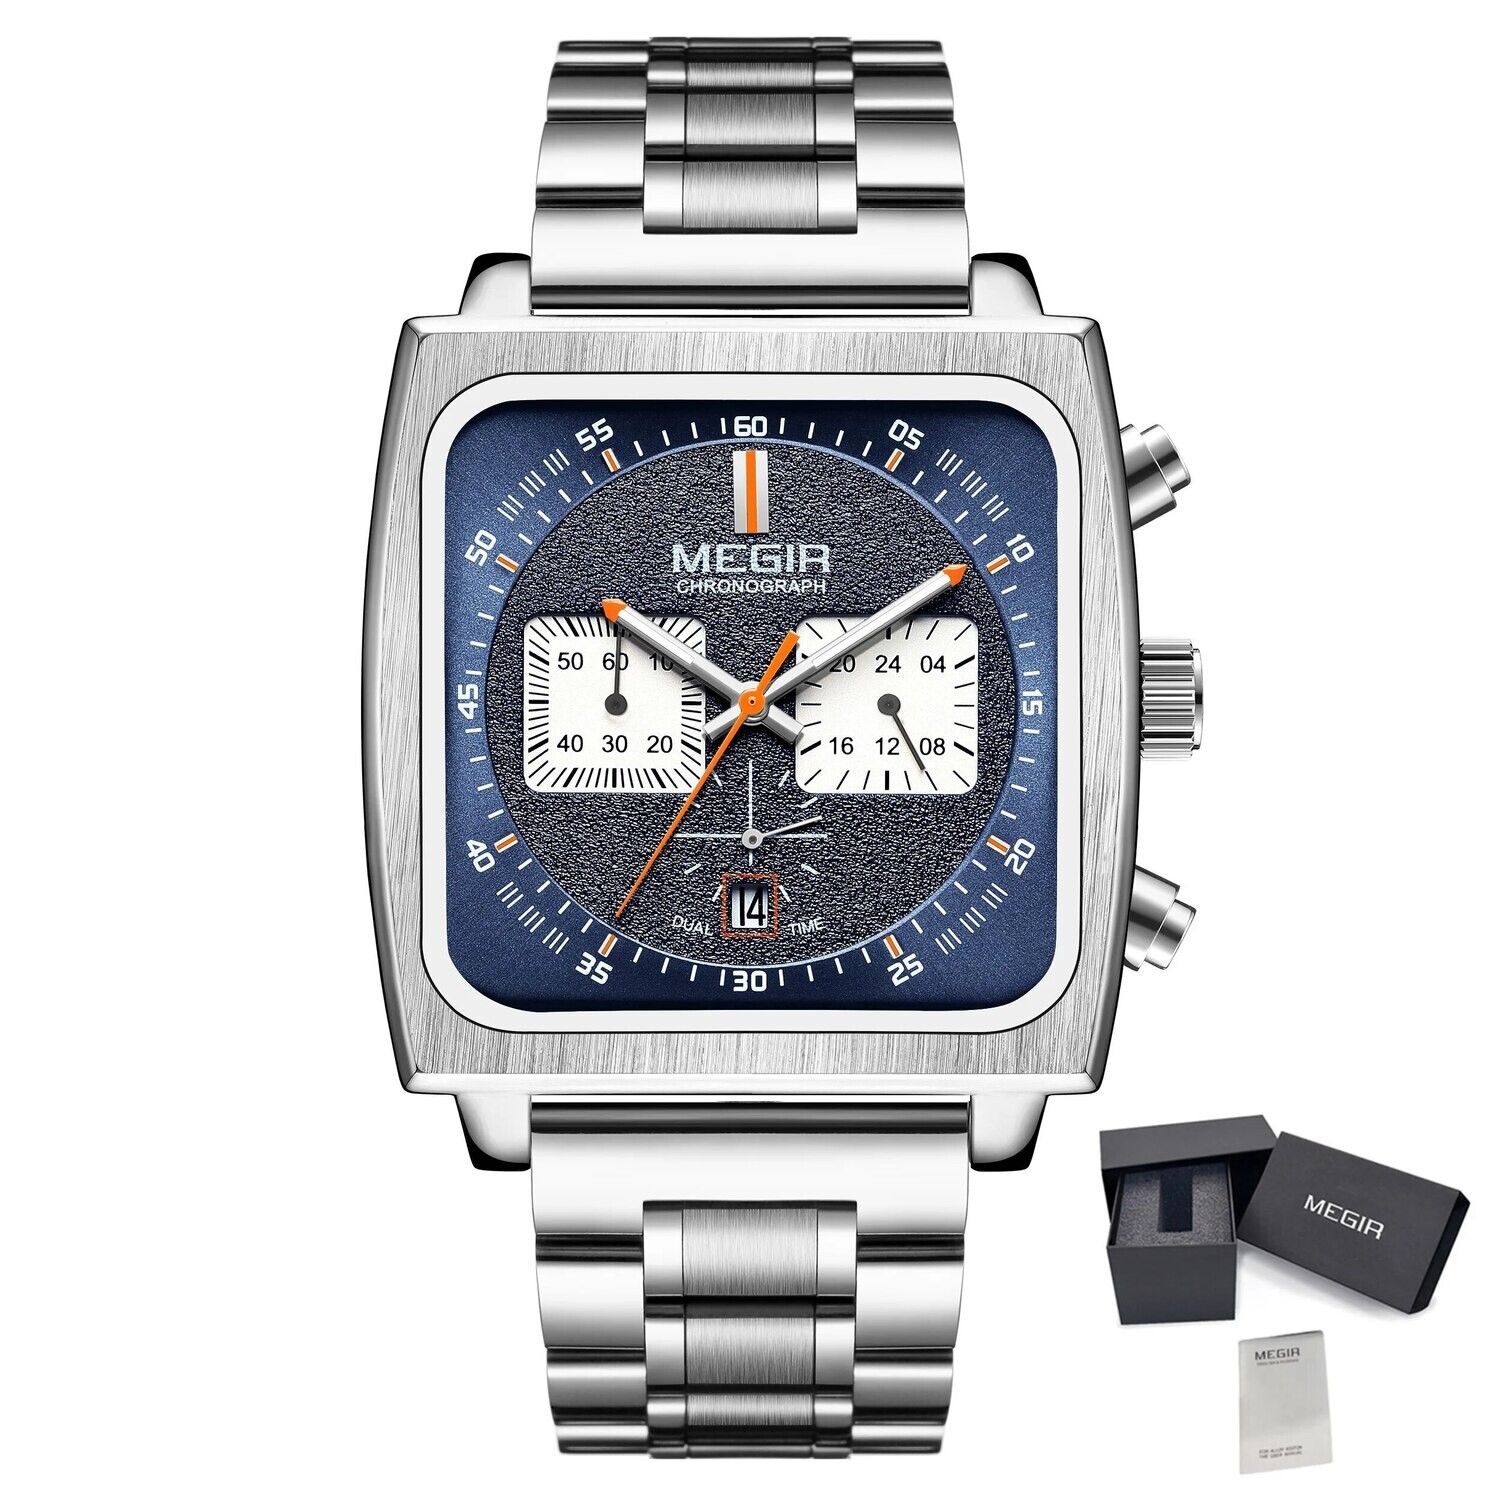 MEGIR Reloj Hombre Original Luxury Business Watch for Men Steel Band Quartz Wristwatch Chronograph Clock ��ѧ�� �ާ�ا�ܧڧ� �ߧѧ���ߧ��